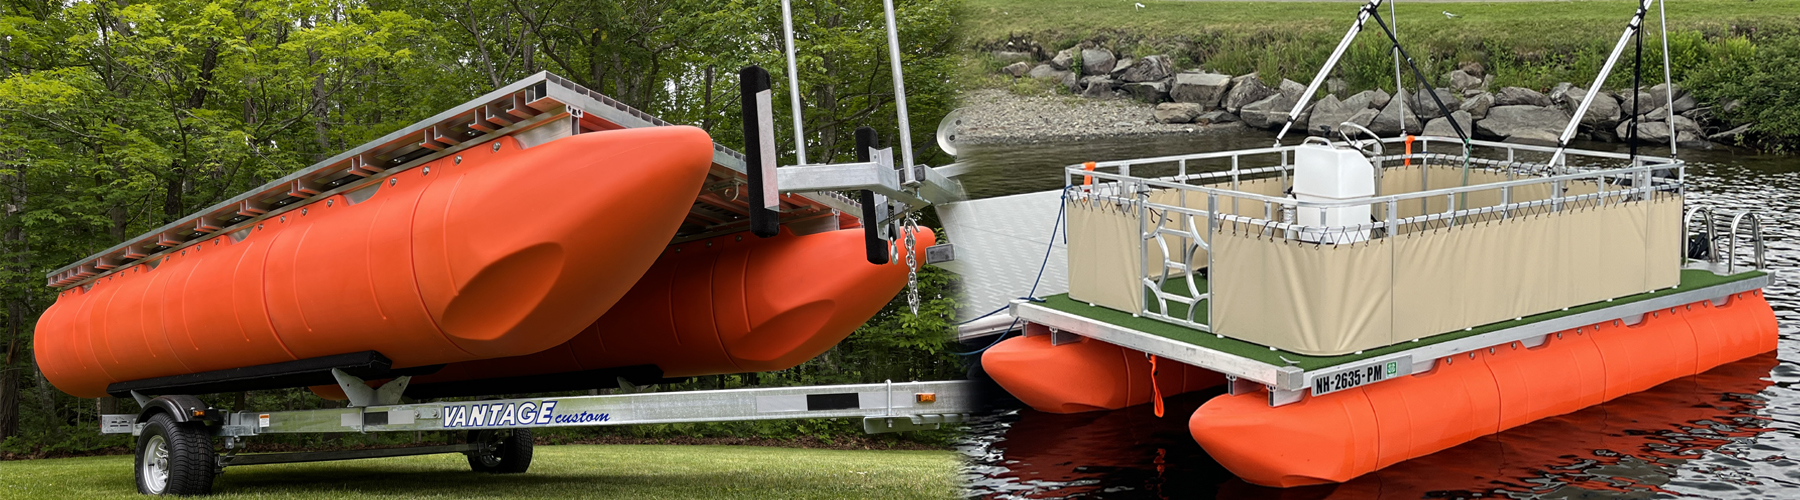  603-630-5658 - plastic pontoons and frame kits for  building boats, rafts, work barges, dredges, robots, USV vessels, and house  boats